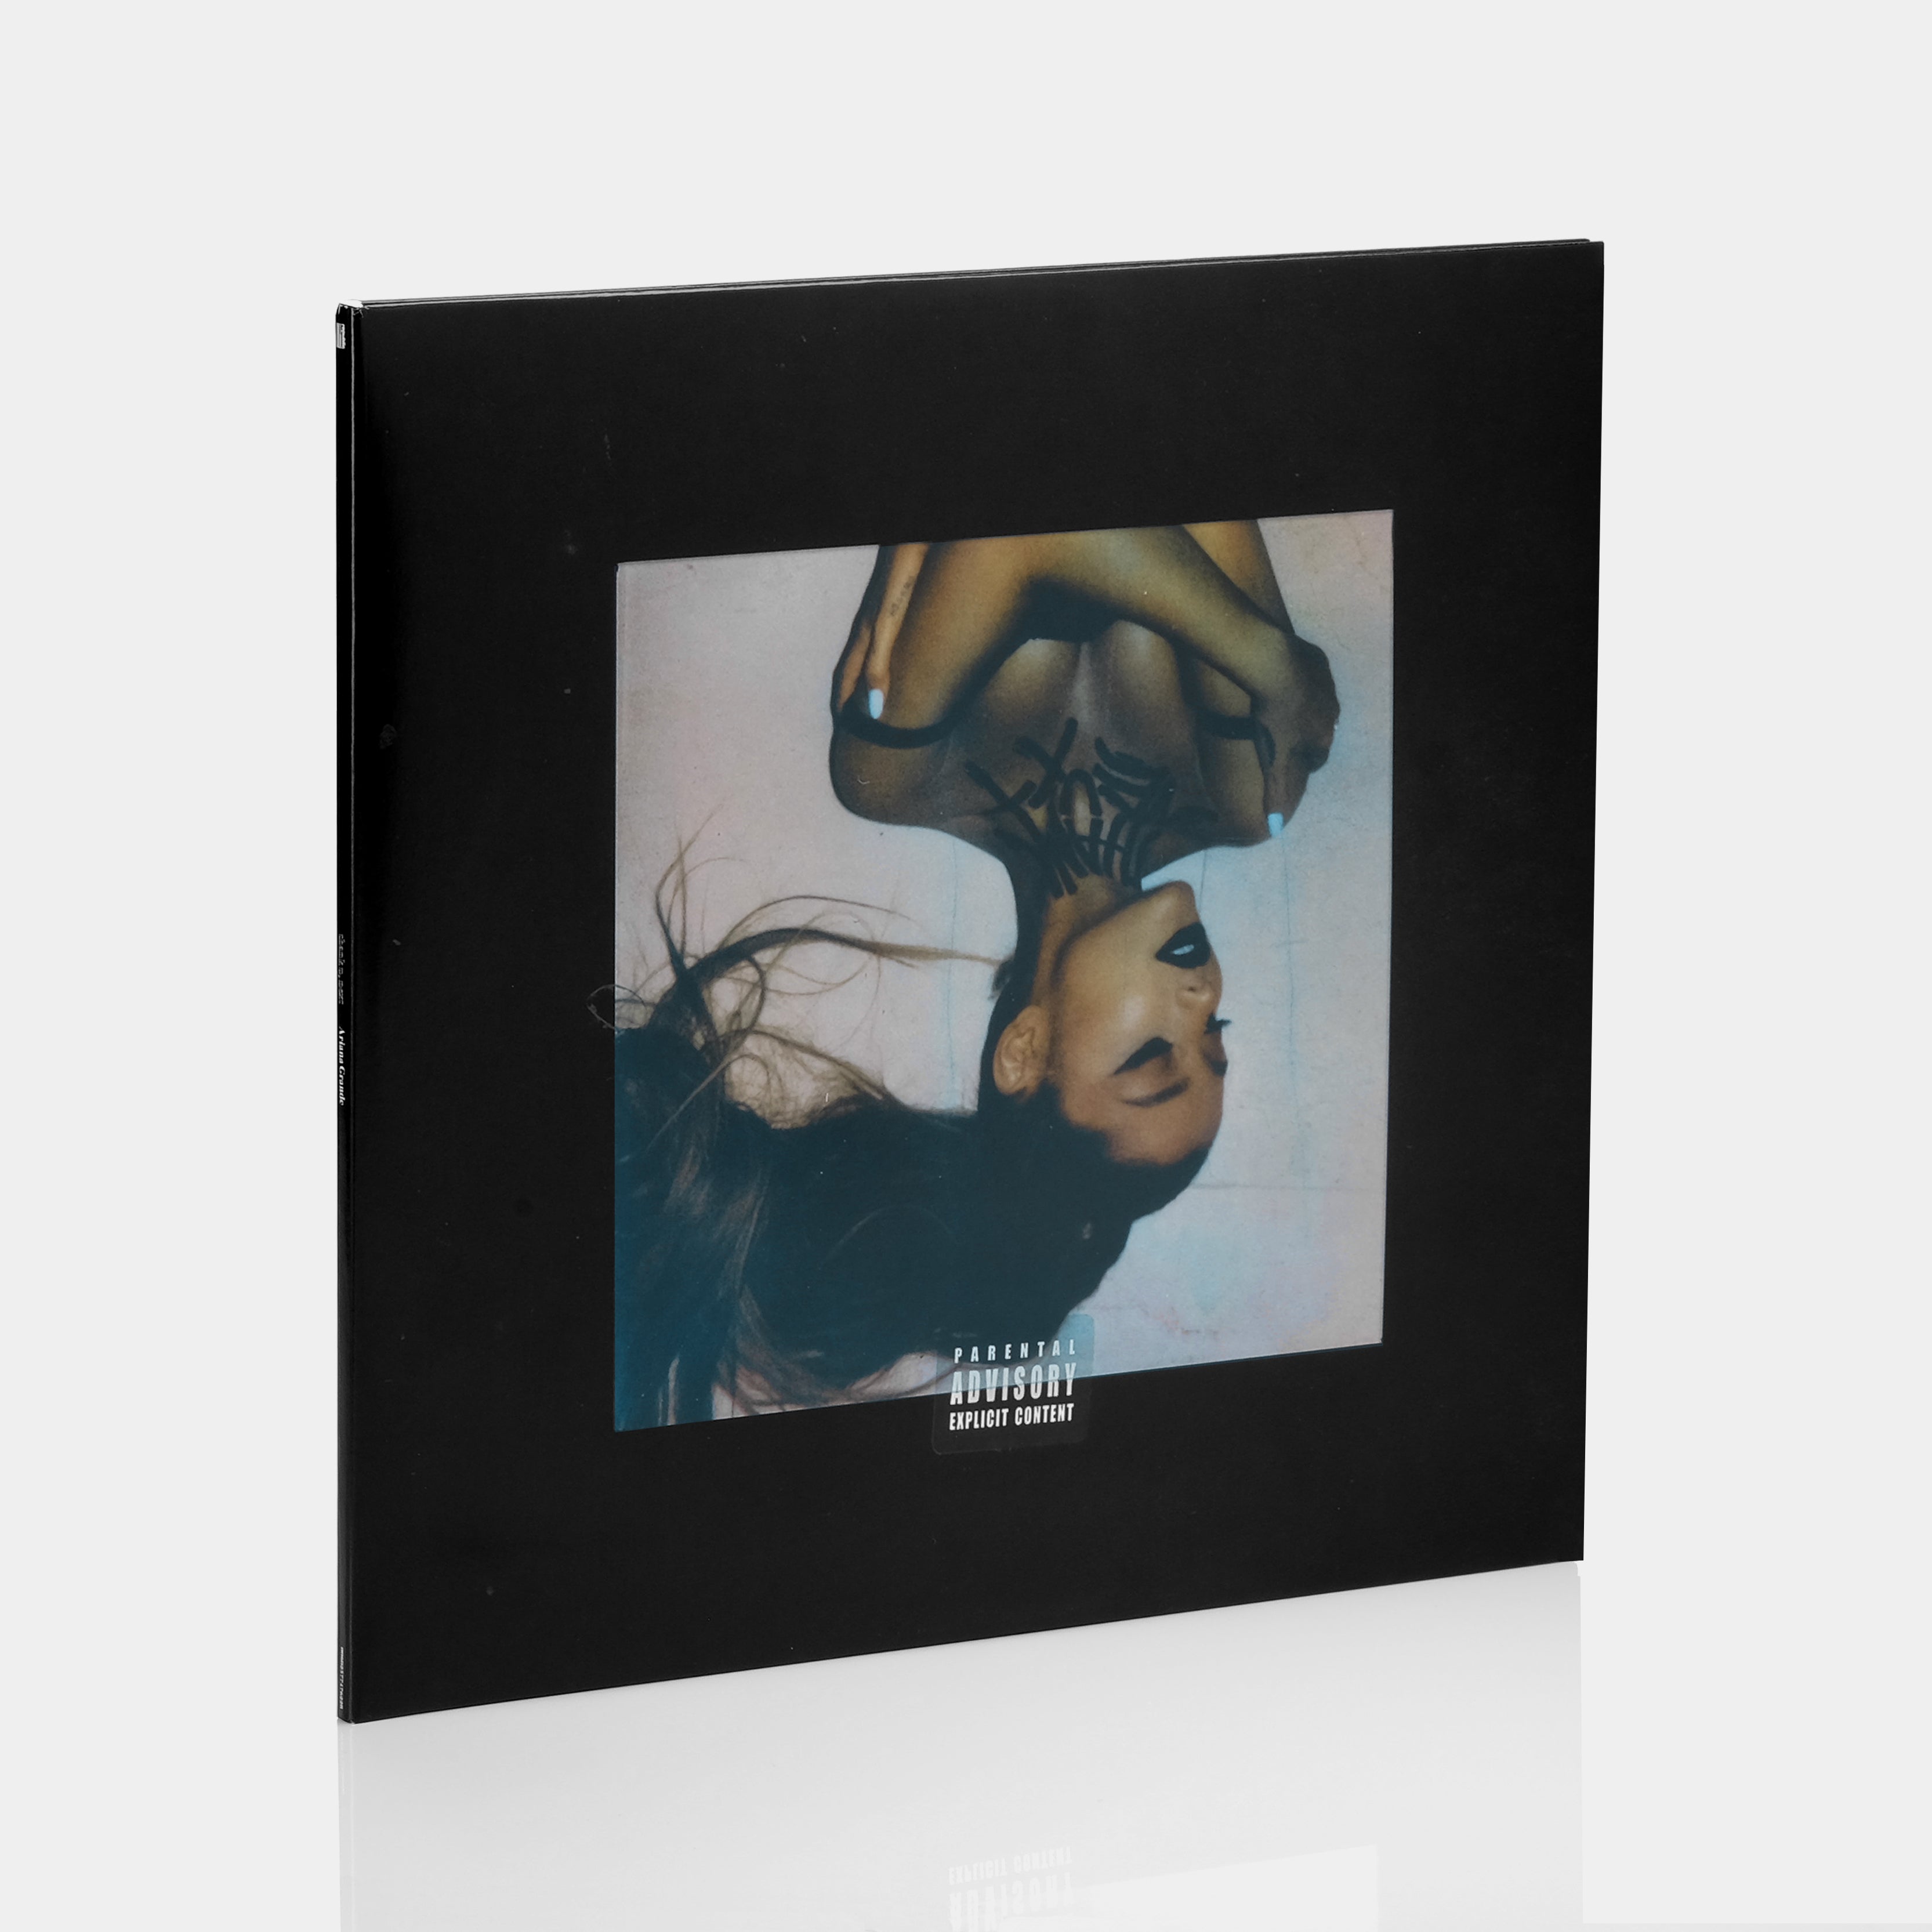 Ariana Grande - thank u, next 2xLP Vinyl Record